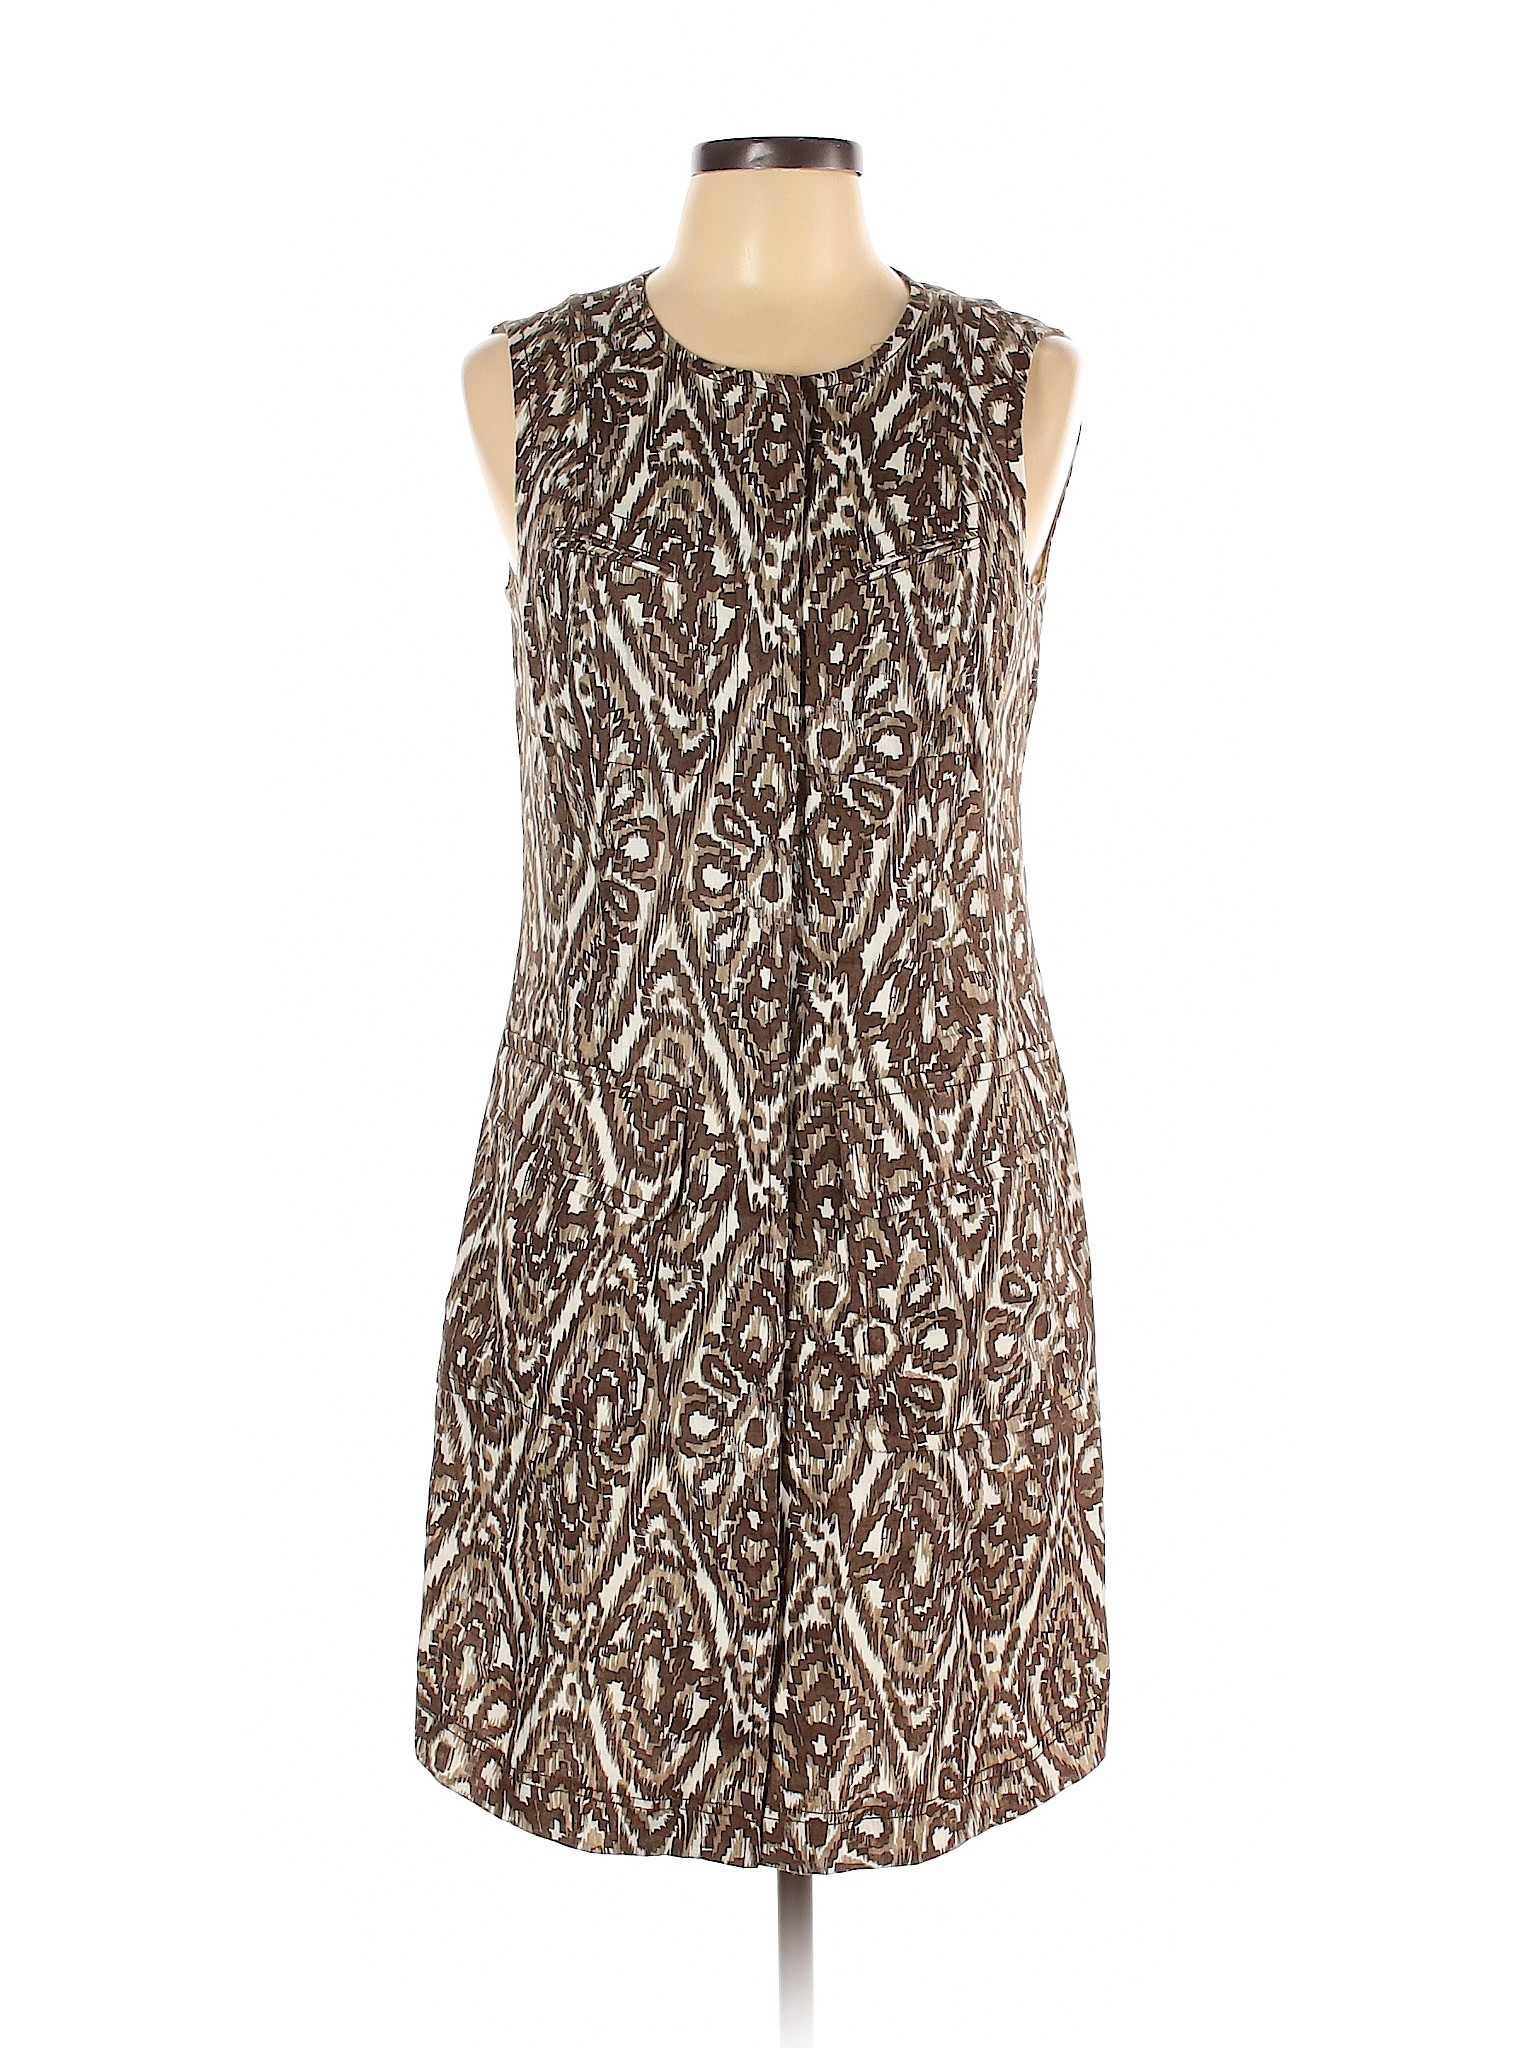 Worthington 100% Linen Green Casual Dress Size 10 - 50% off | thredUP